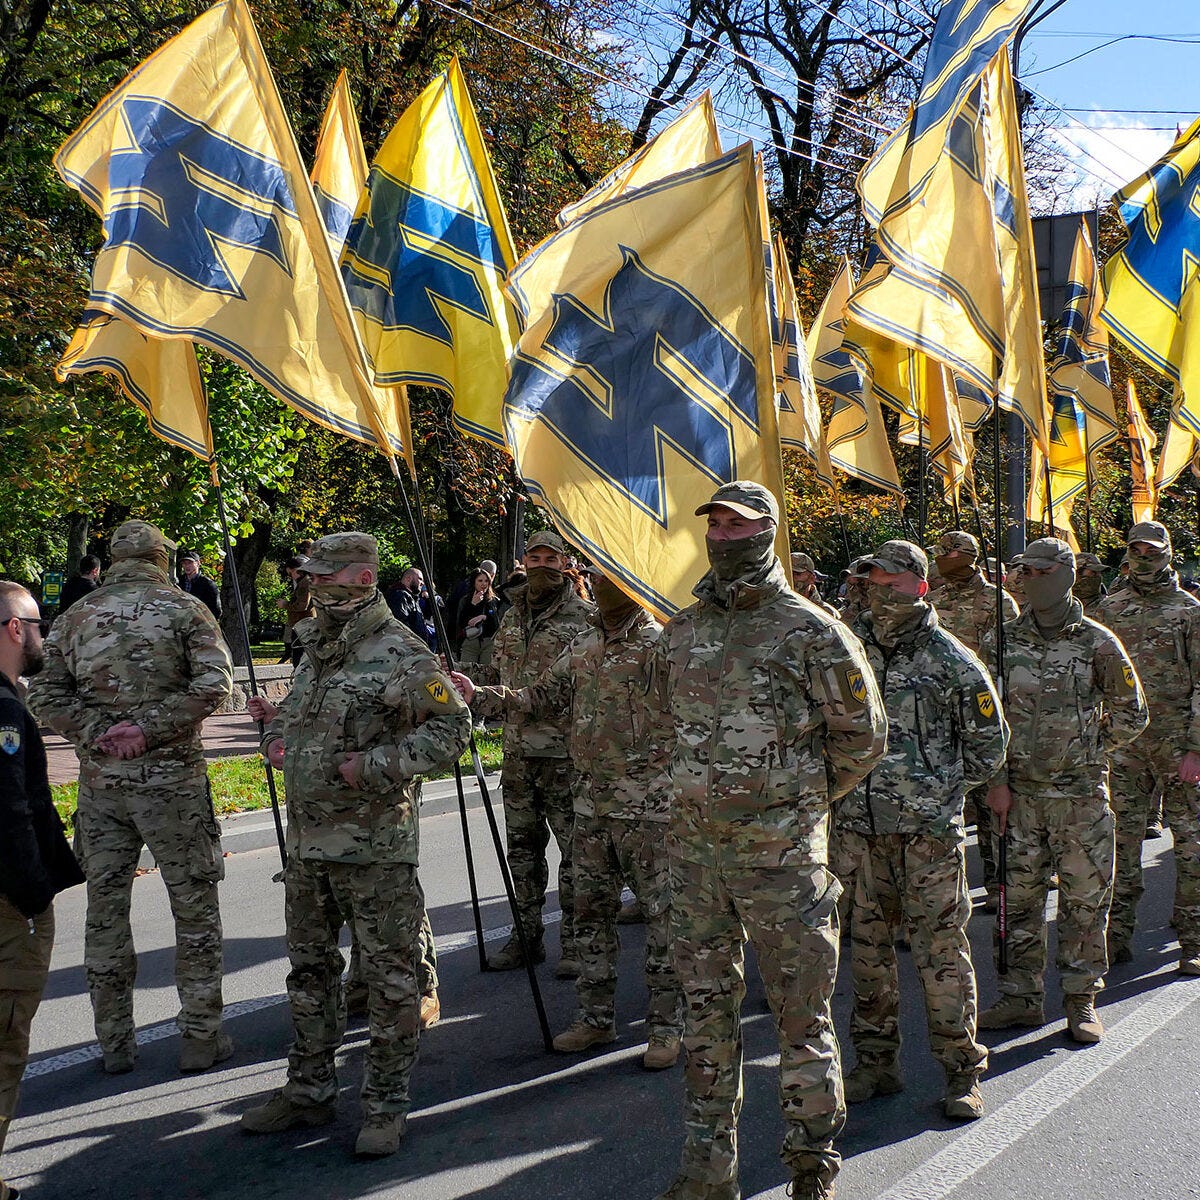 The West Ignores the Presence of Neo-Nazis in Ukraine